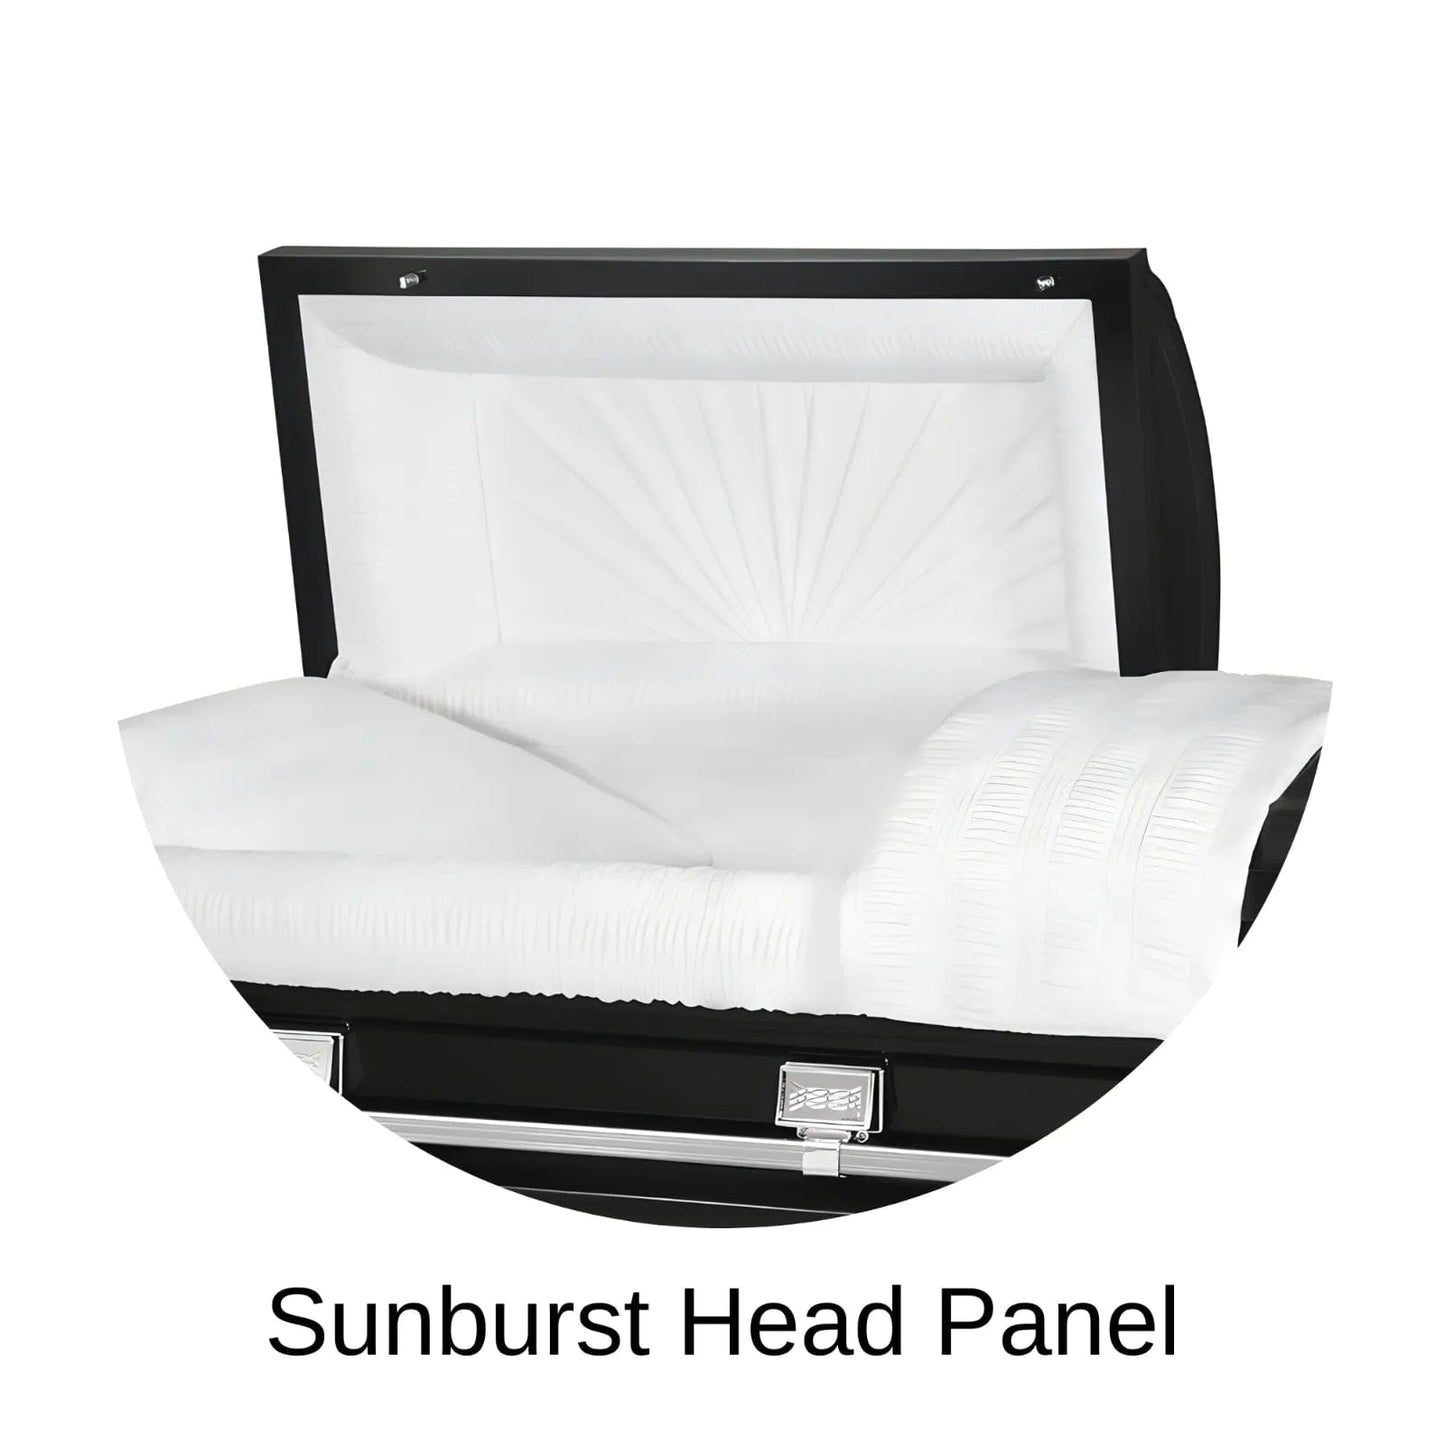 Sunburst Head Panel Of Titan Atlas XL Series Casket 